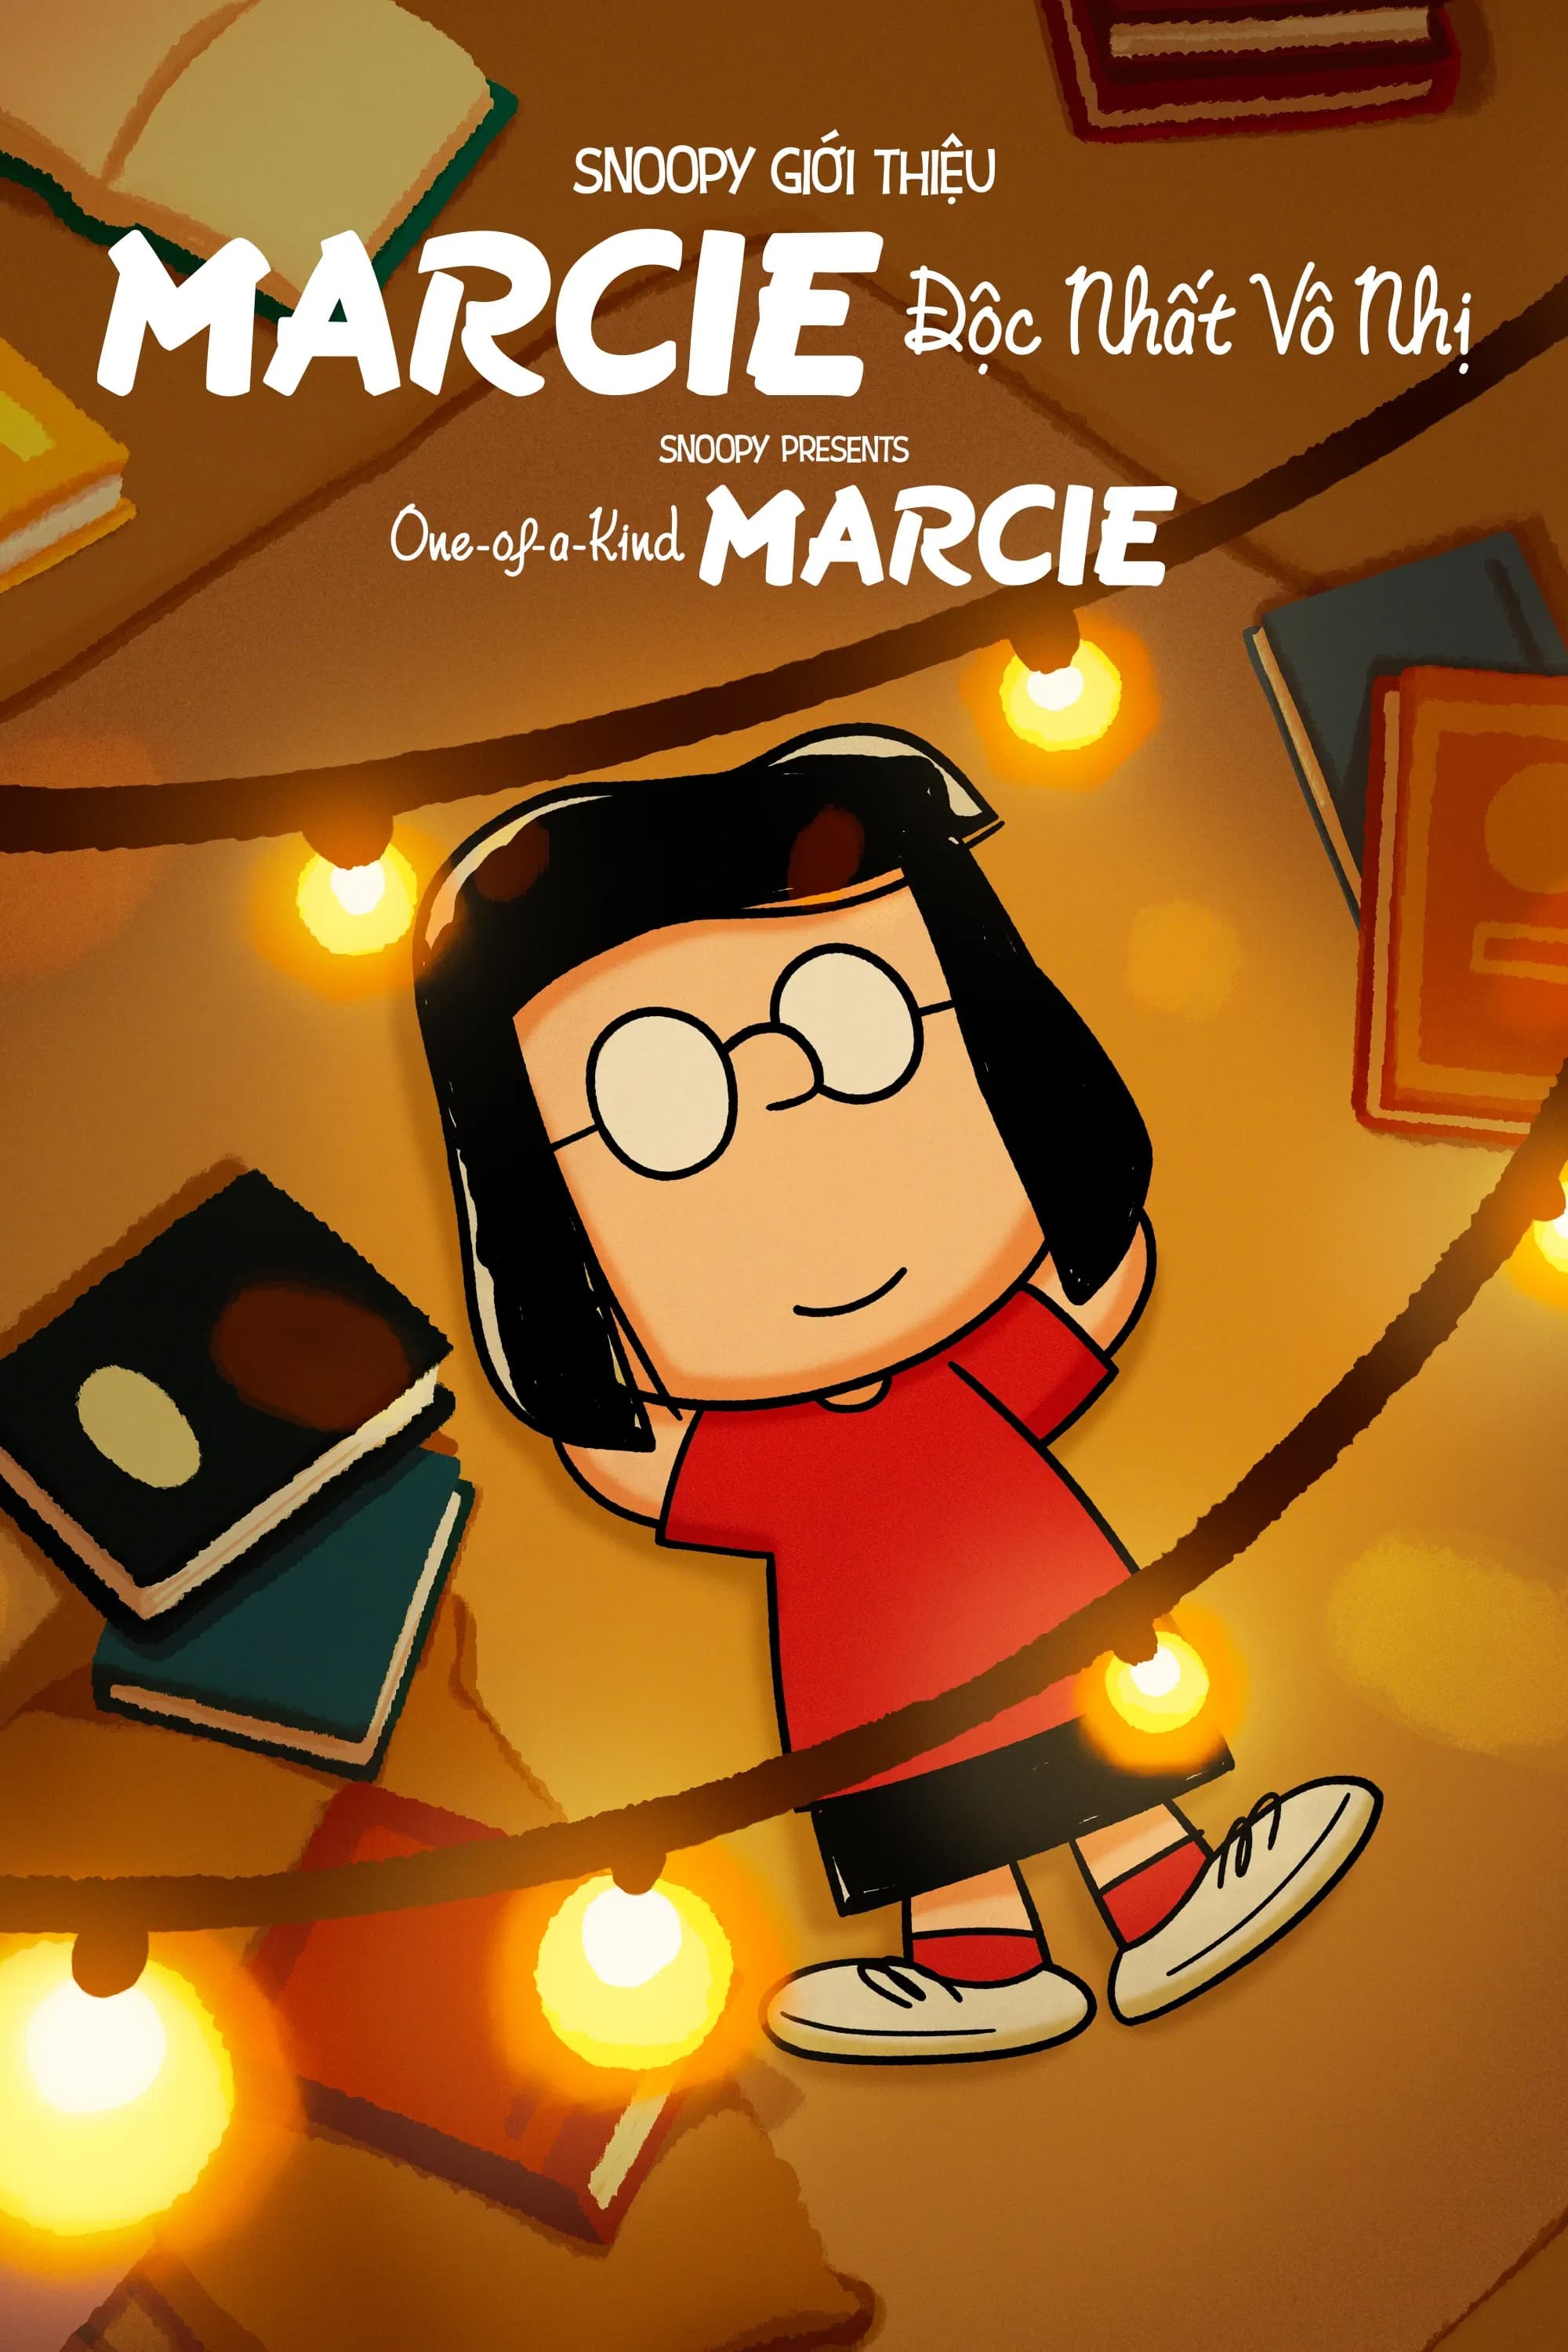 Banner Phim Snoopy Giới Thiệu: Marcie Độc Nhất Vô Nhị (Snoopy Presents: One-of-a-Kind Marcie)